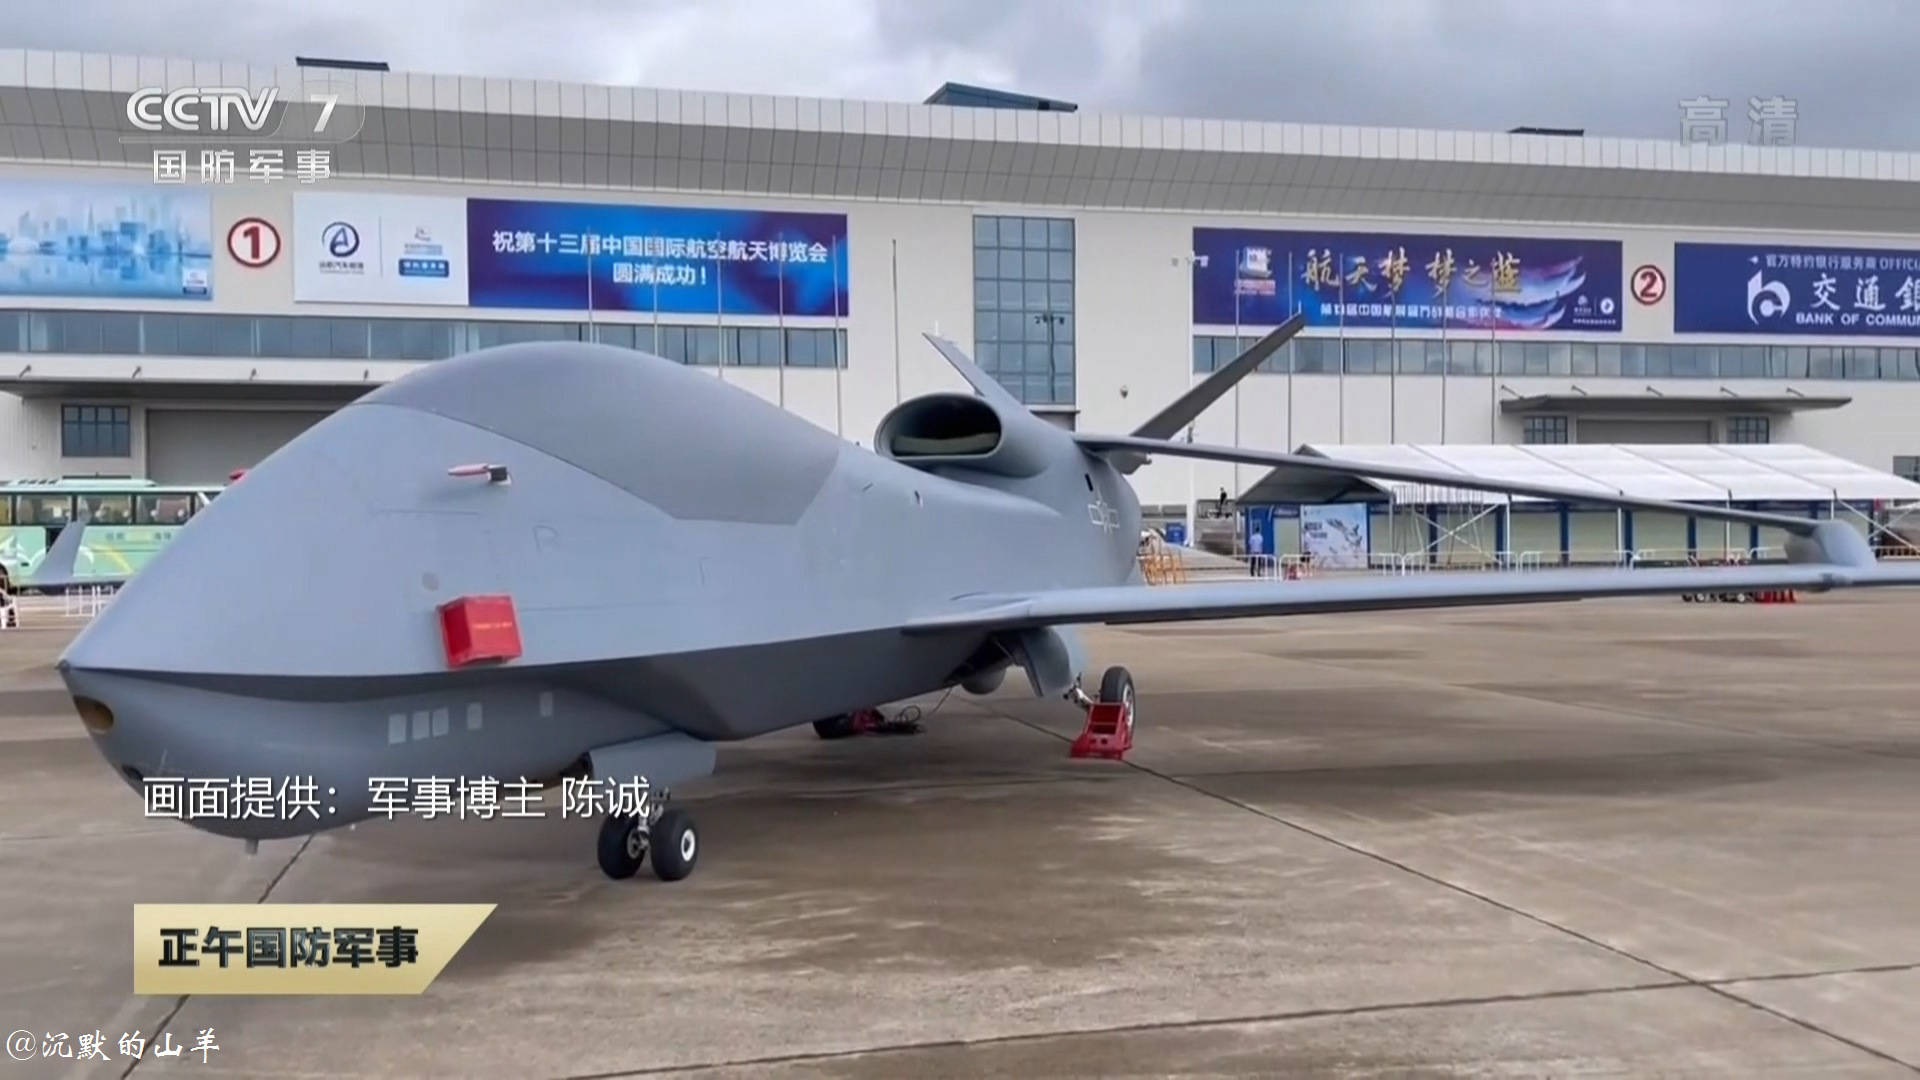 WZ-7: Το νέο drone της Κίνας είναι πιστή αντιγραφή του αμερικανικού Global Hawk